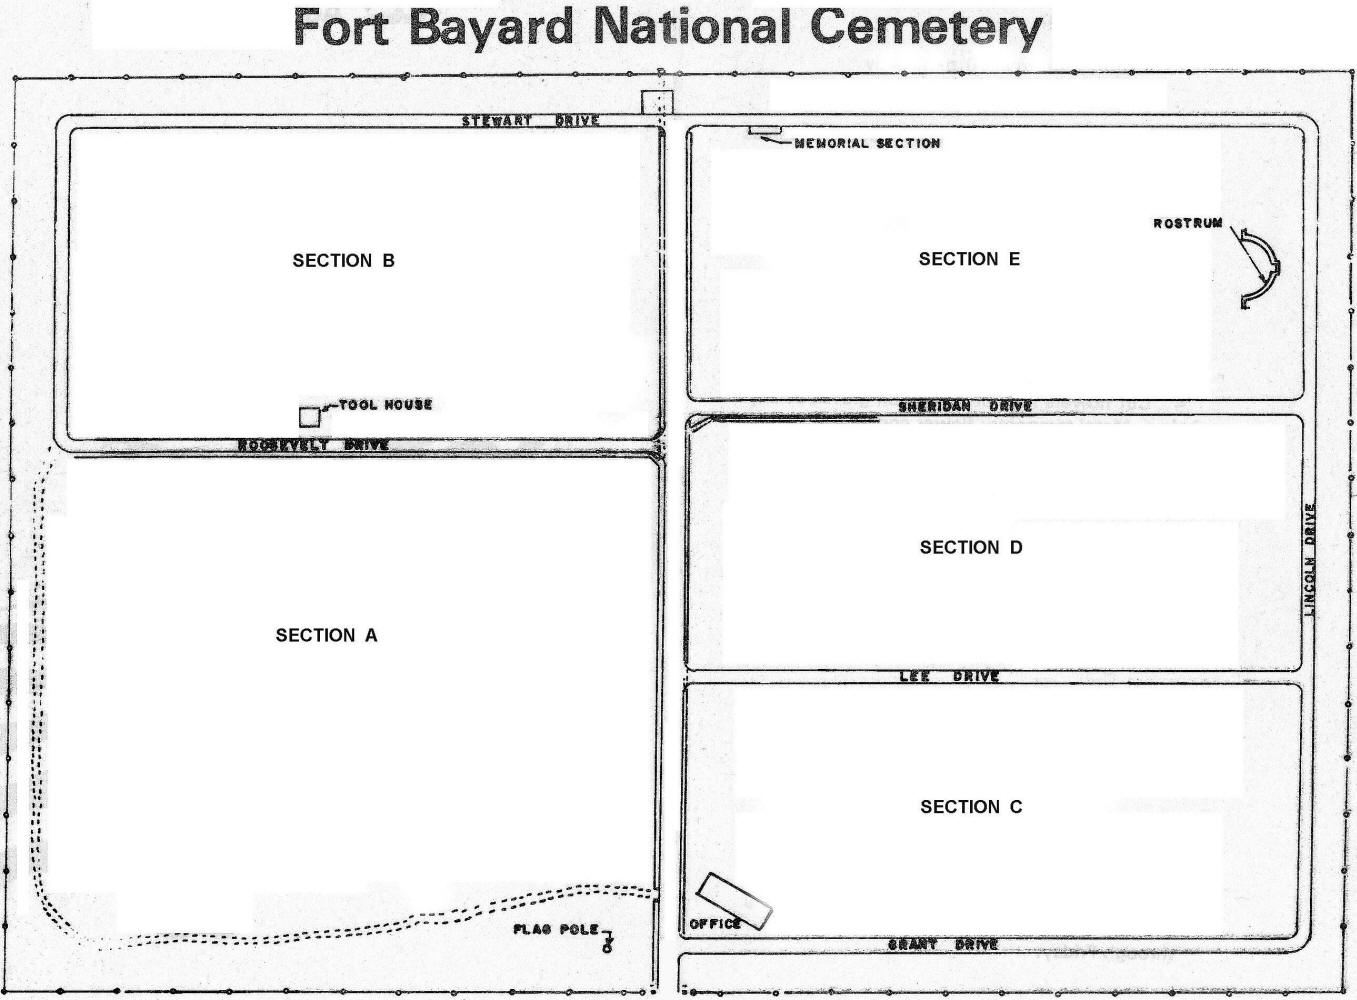 Grant Cemetery Maps1357 x 1000